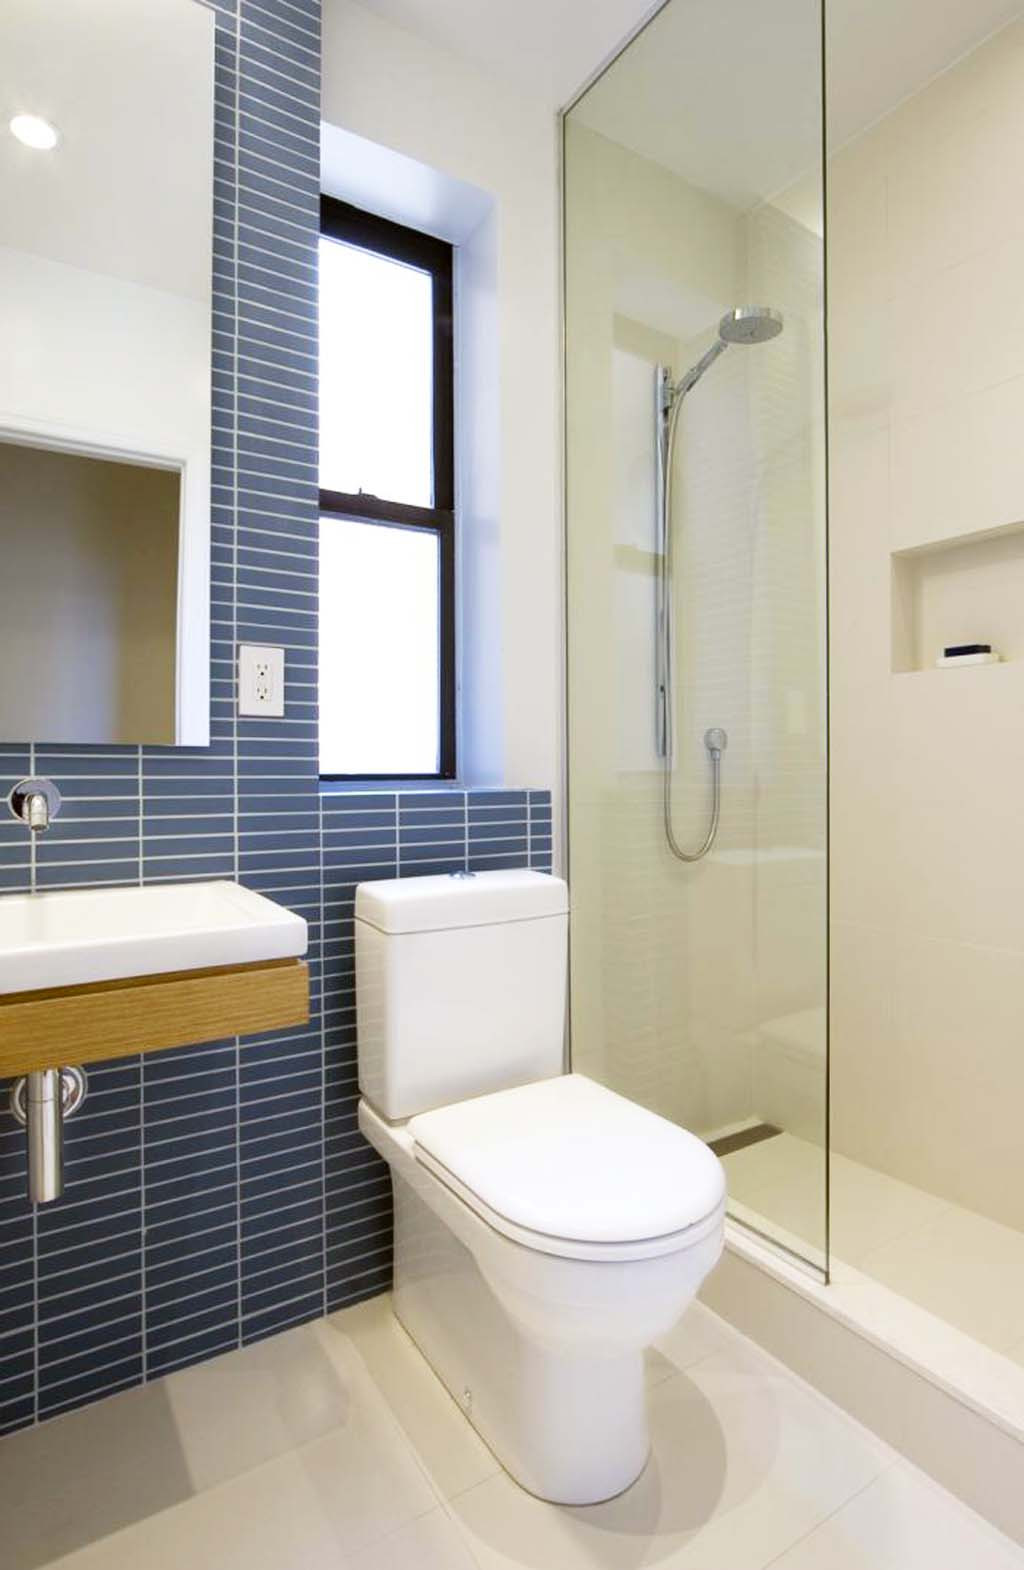 desain kamar mandi minimalis 1.5 x 1.5 | arsitekhom